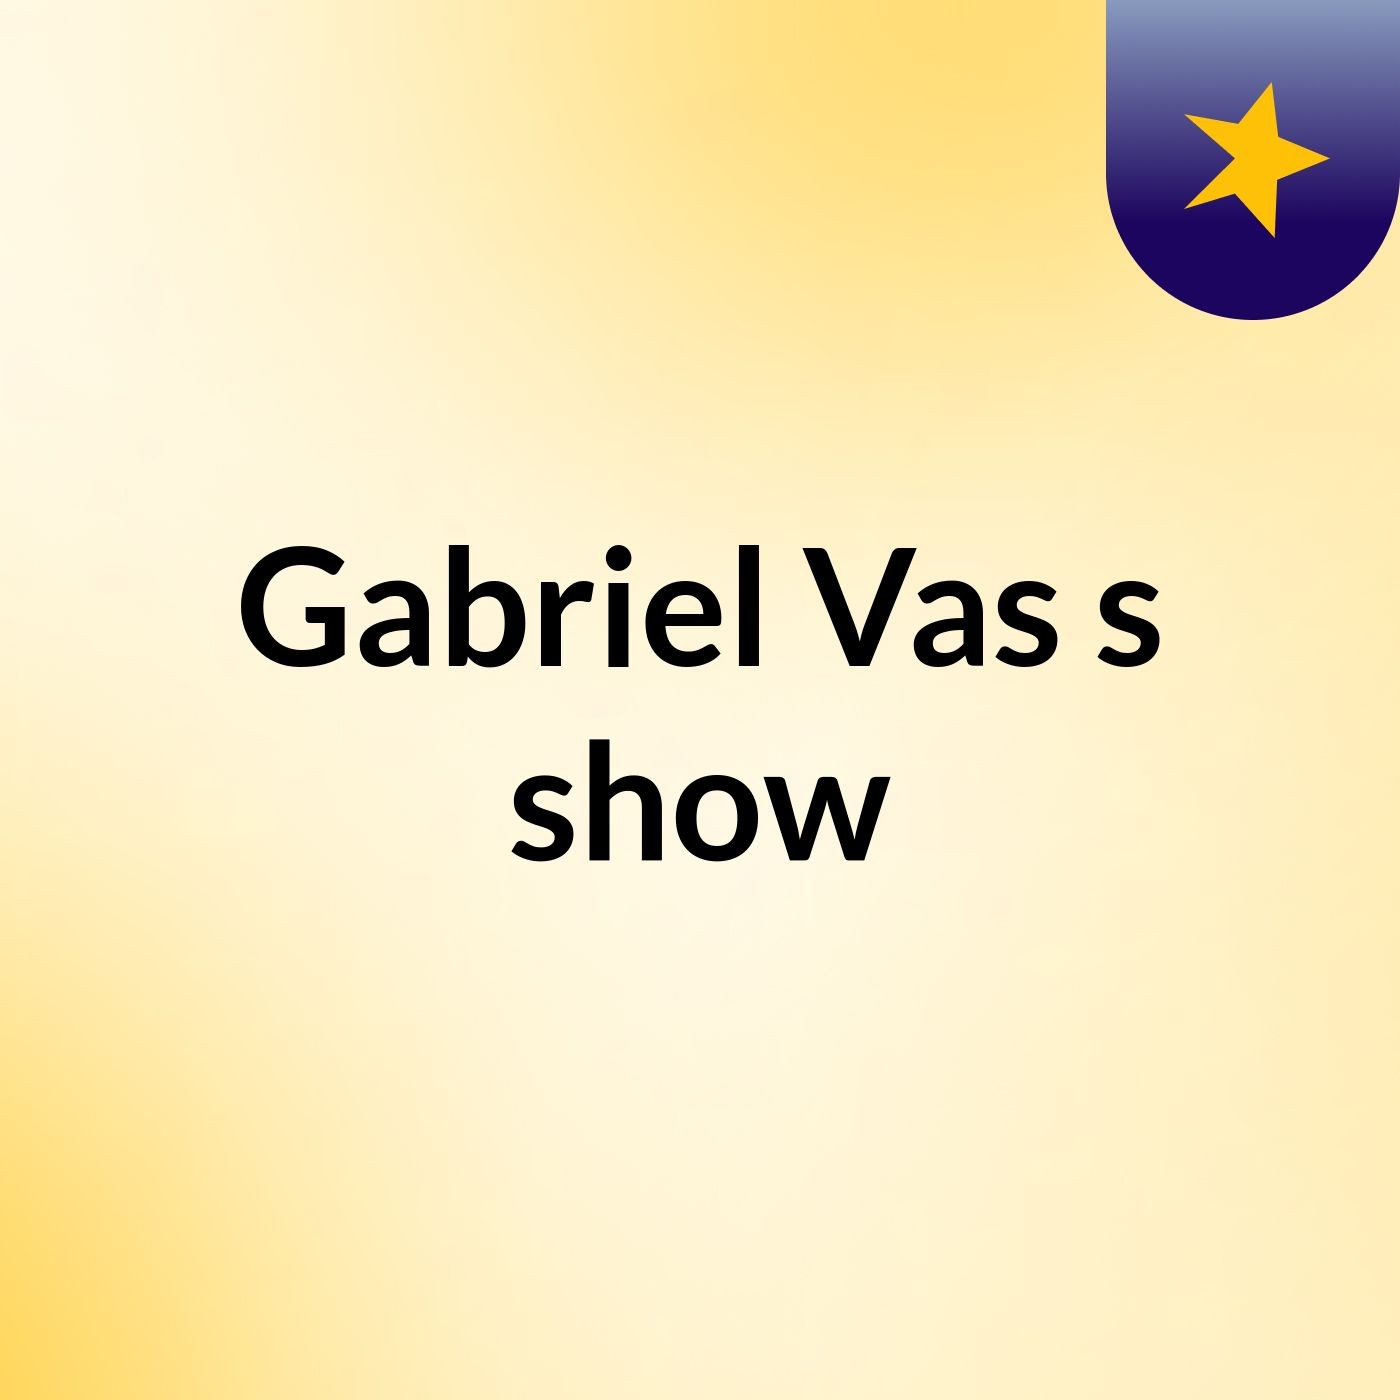 Gabriel Vas's show